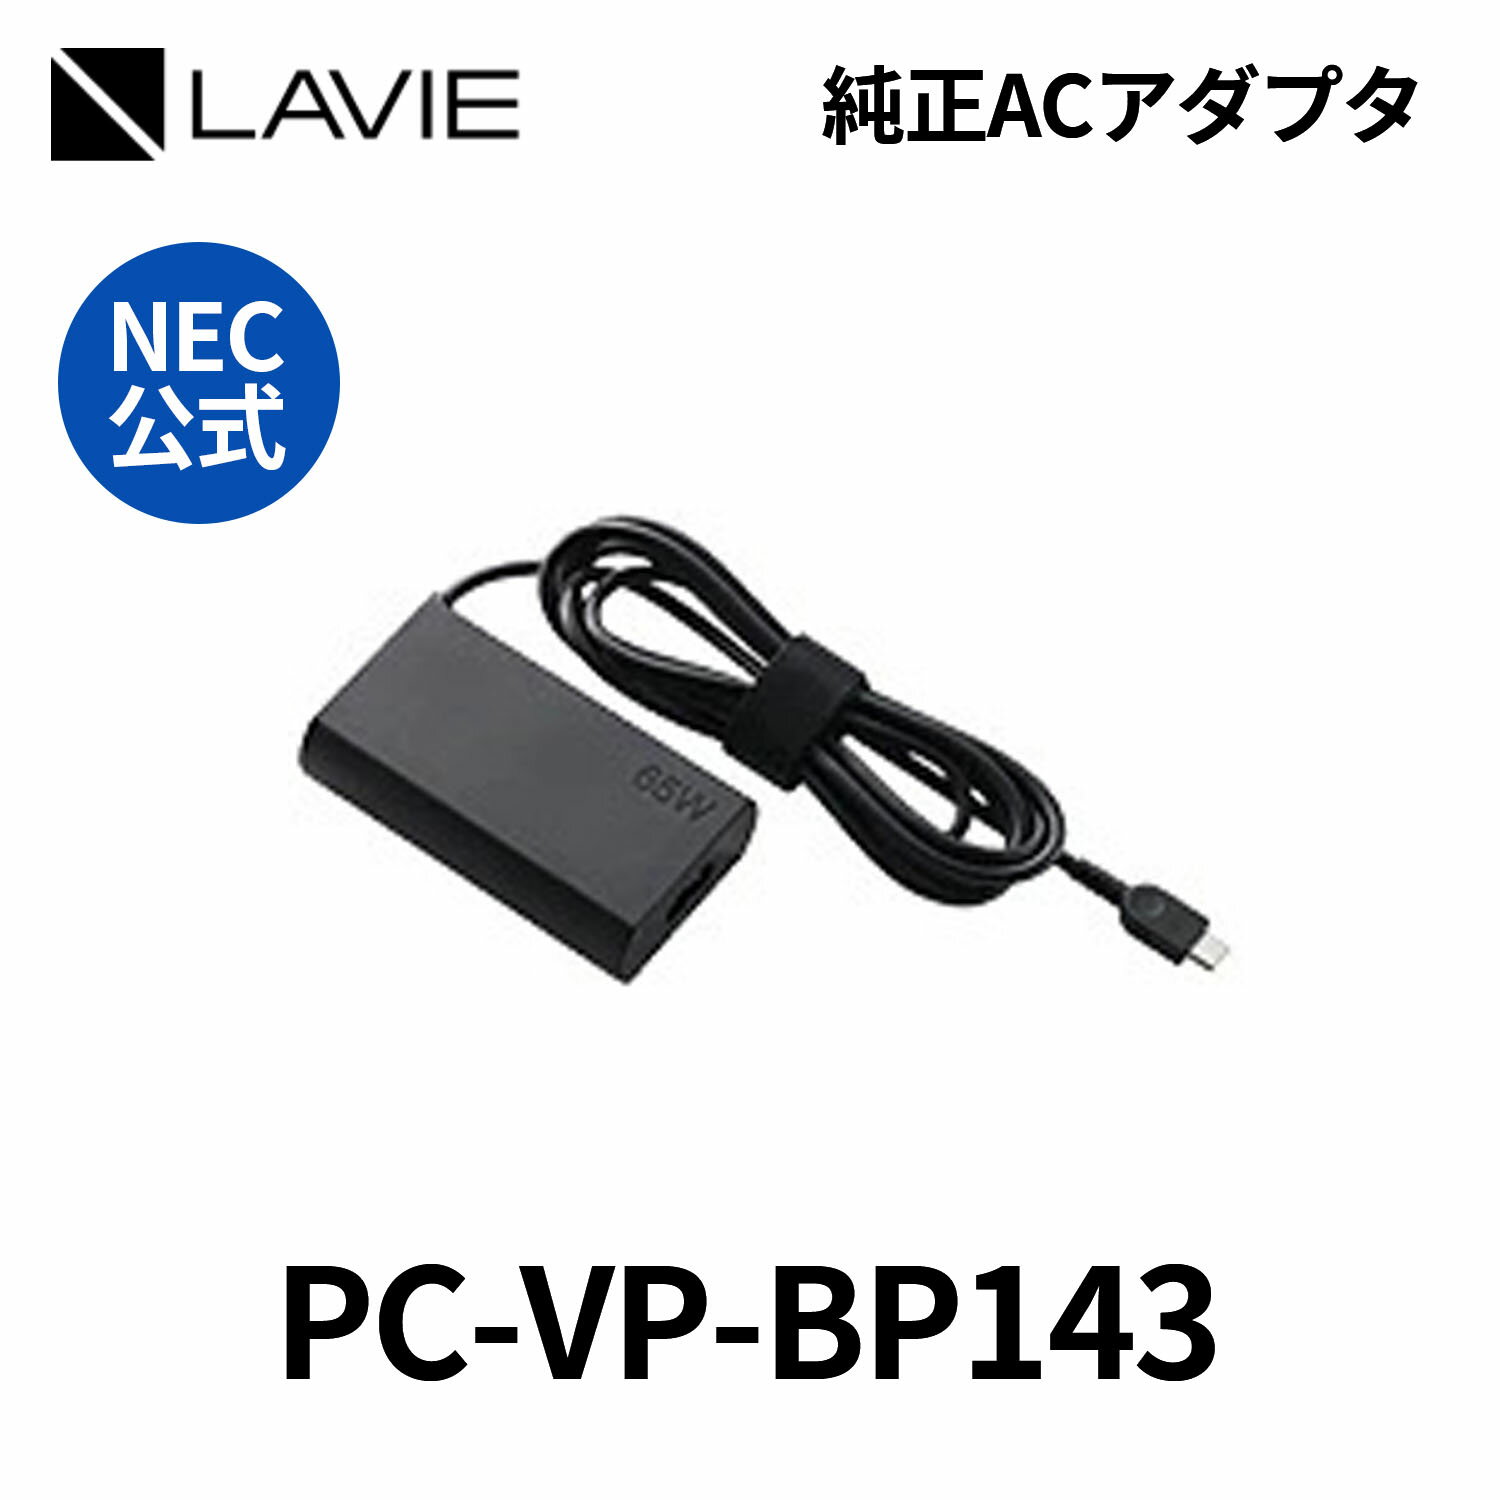 NEC 　純正　新品　AC 電源アダプタ 充電器　PC　パソコン　LAVIE用　YS-VP-BP143